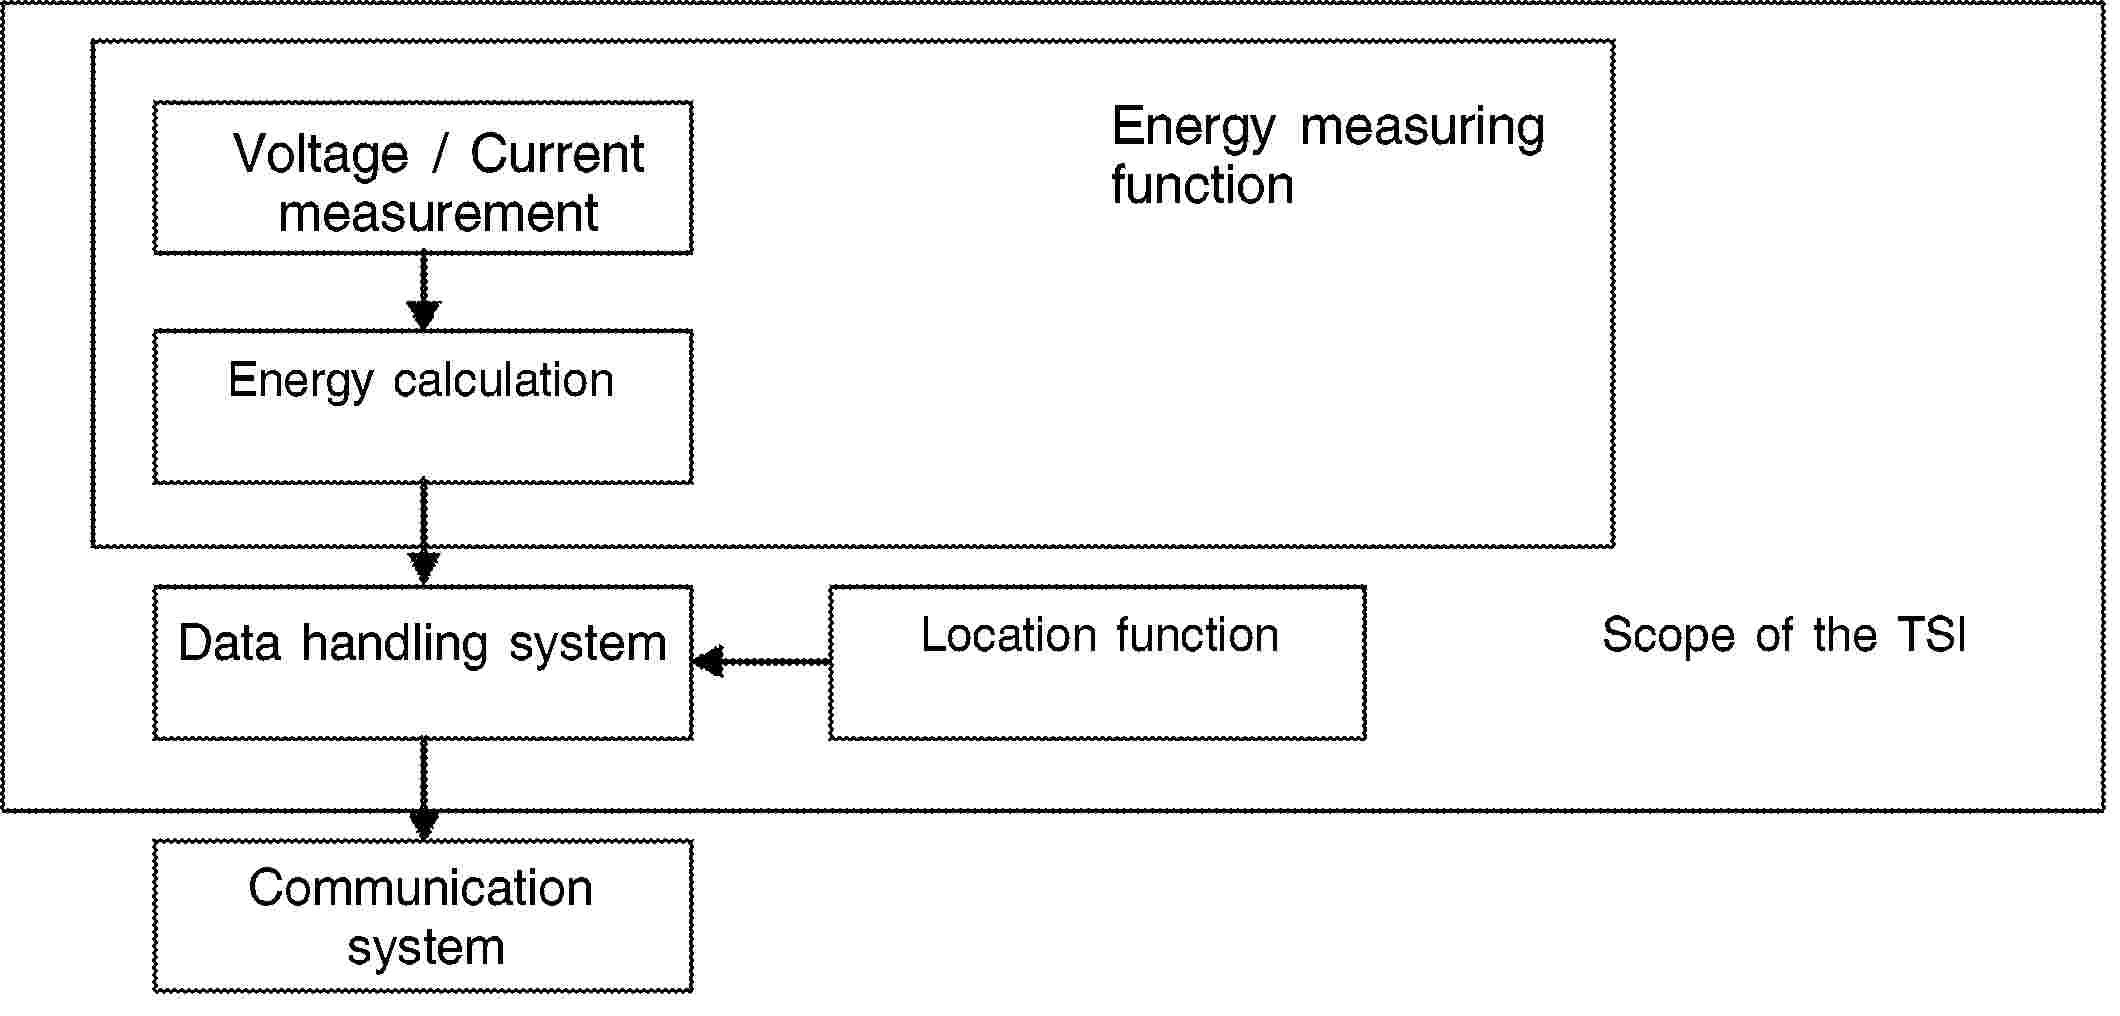 Energy measuring functionLocation functionScope of the TSIVoltage / Current measurementEnergy calculationData handling systemCommunication system